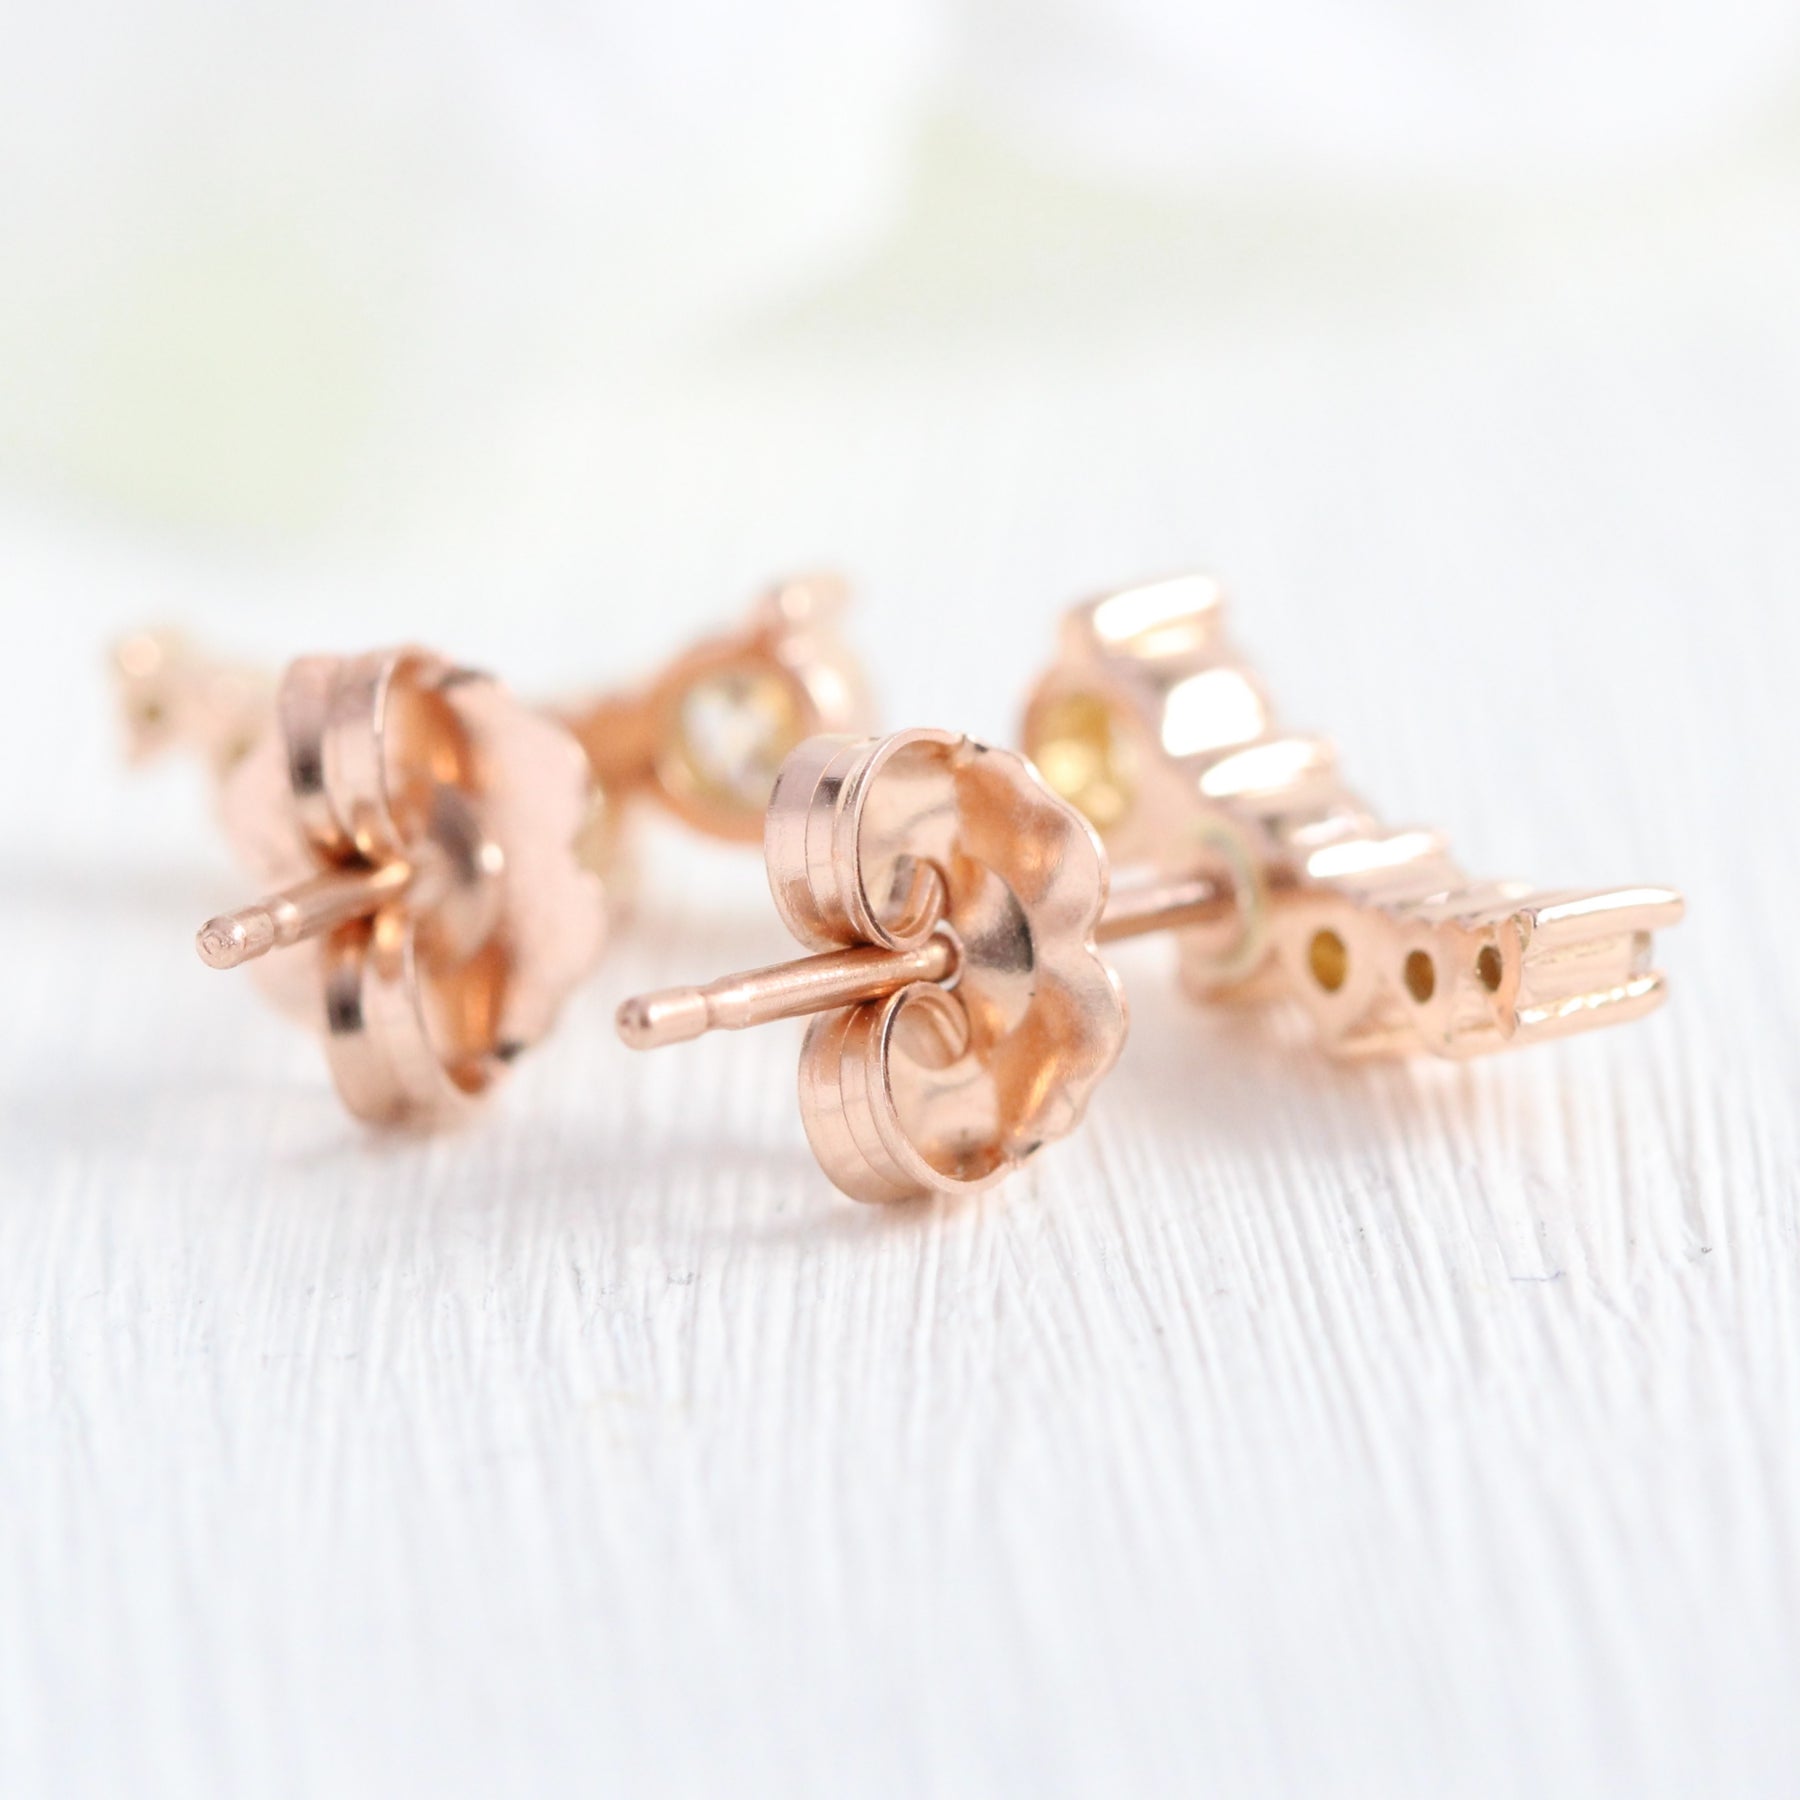 5 black diamond earrings studs rose gold crawler diamond earrings la more design jewelry